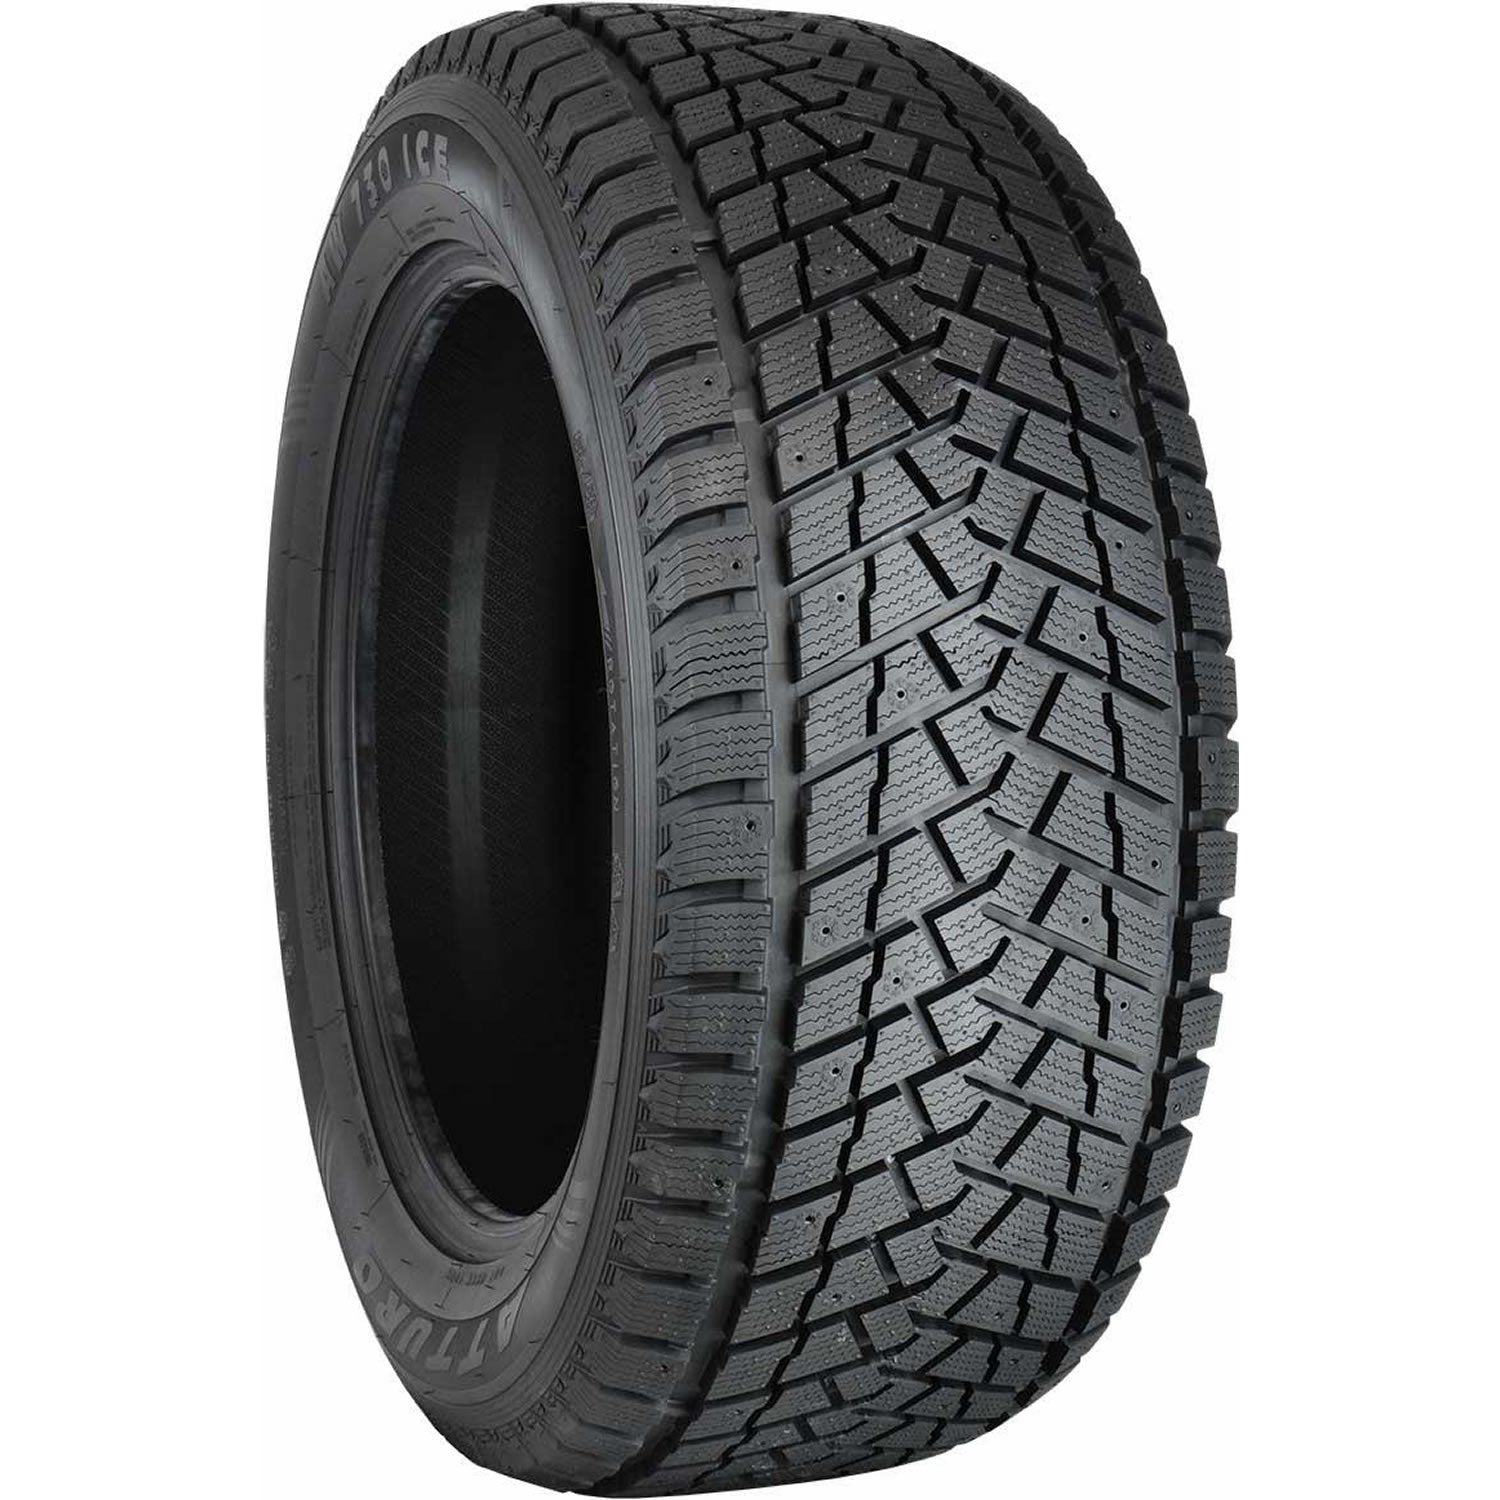 ATTURO AW730 ICE 285/50R20 (31.4X11.5R 20) Tires